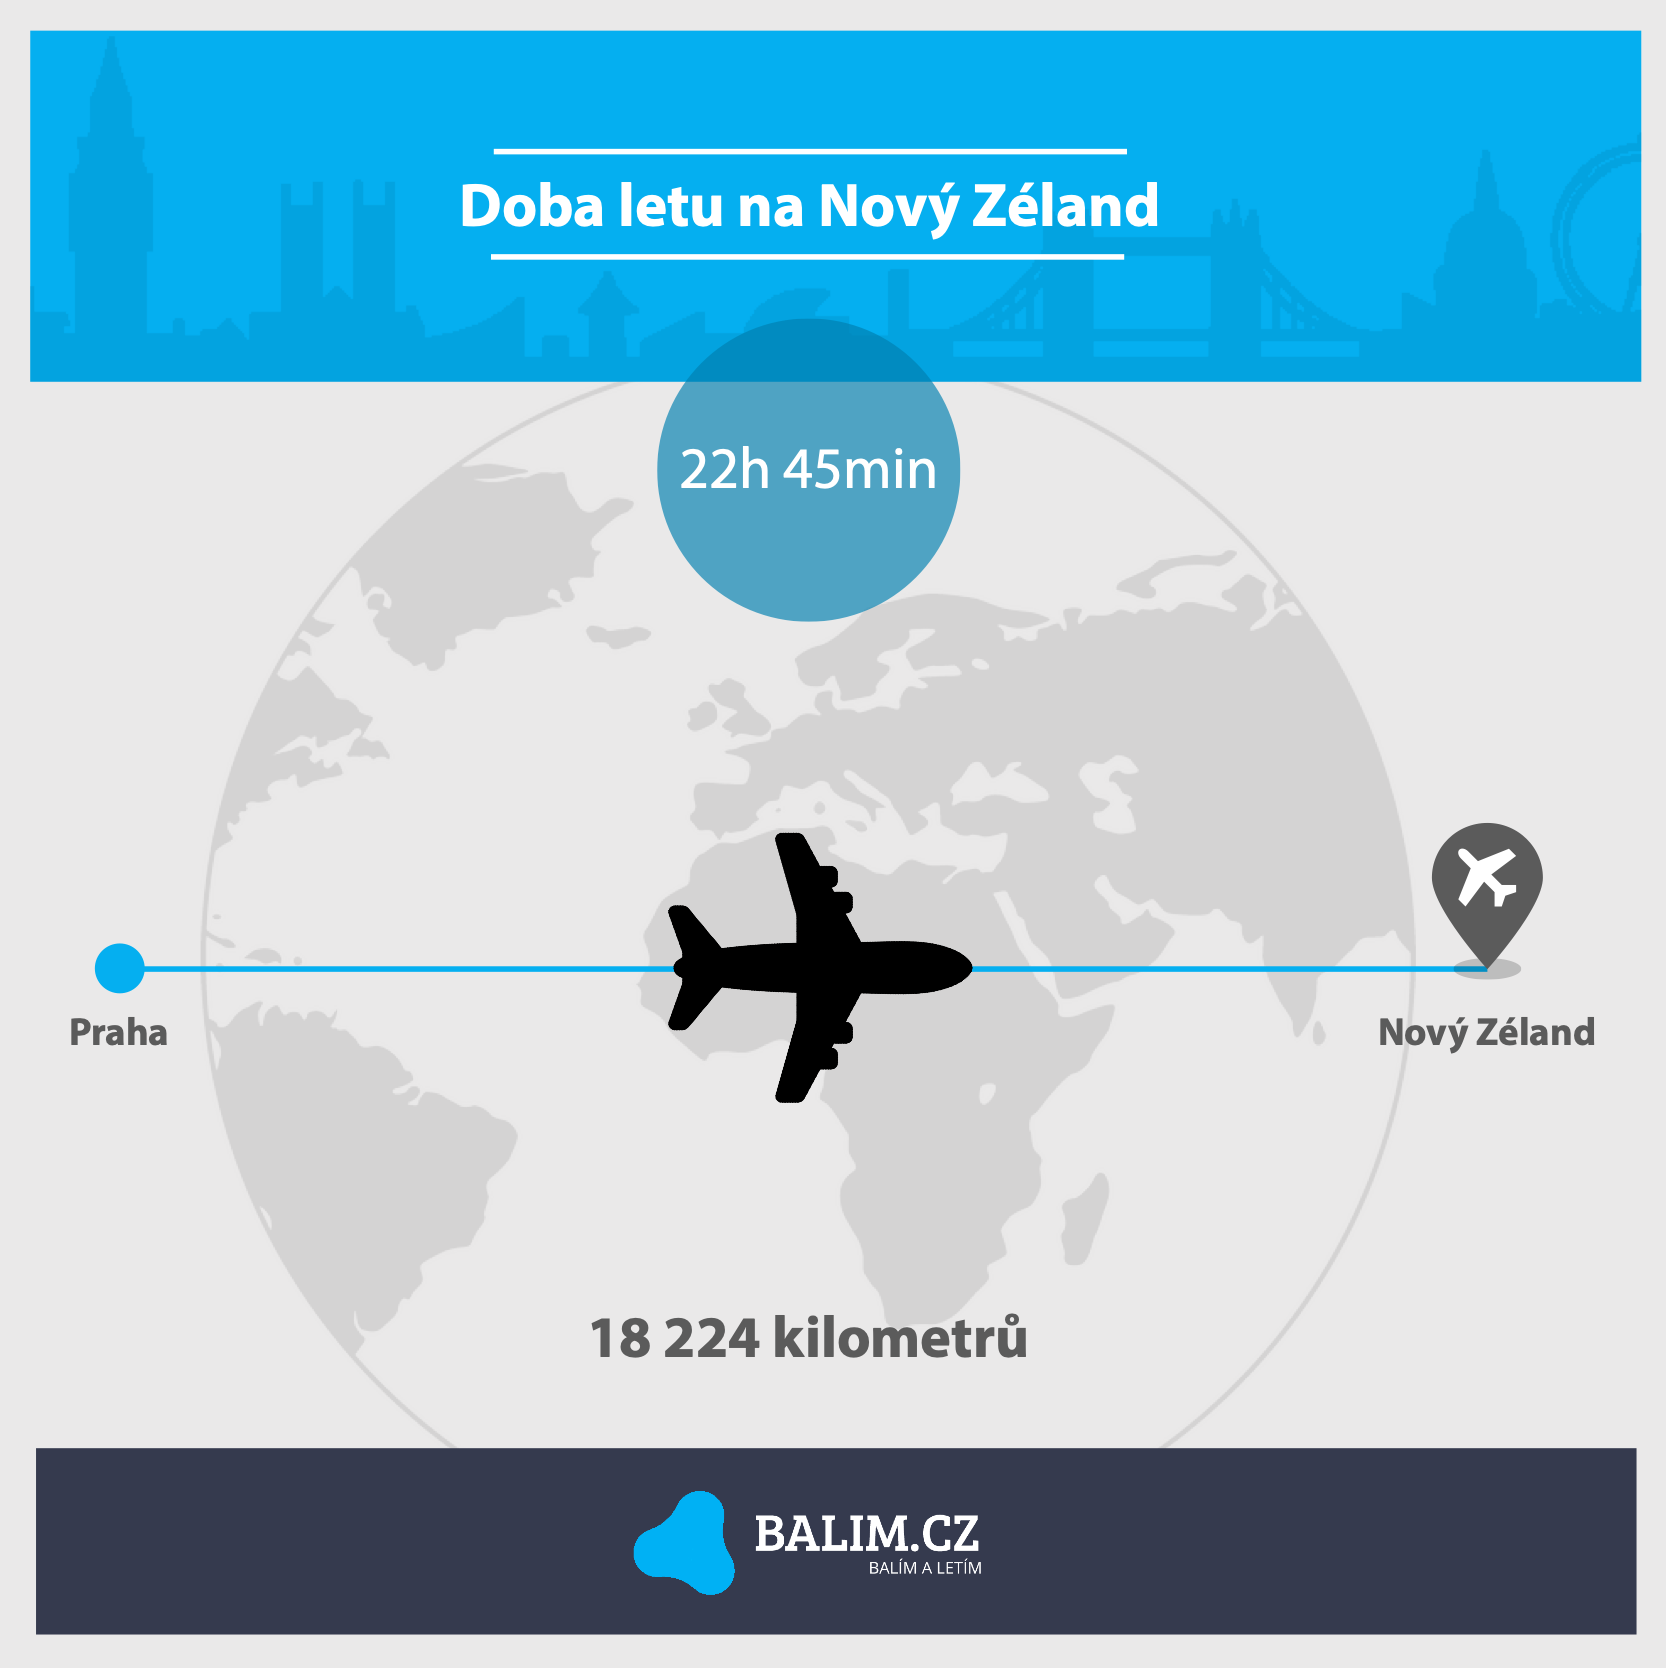 Doba letu na Nový Zéland